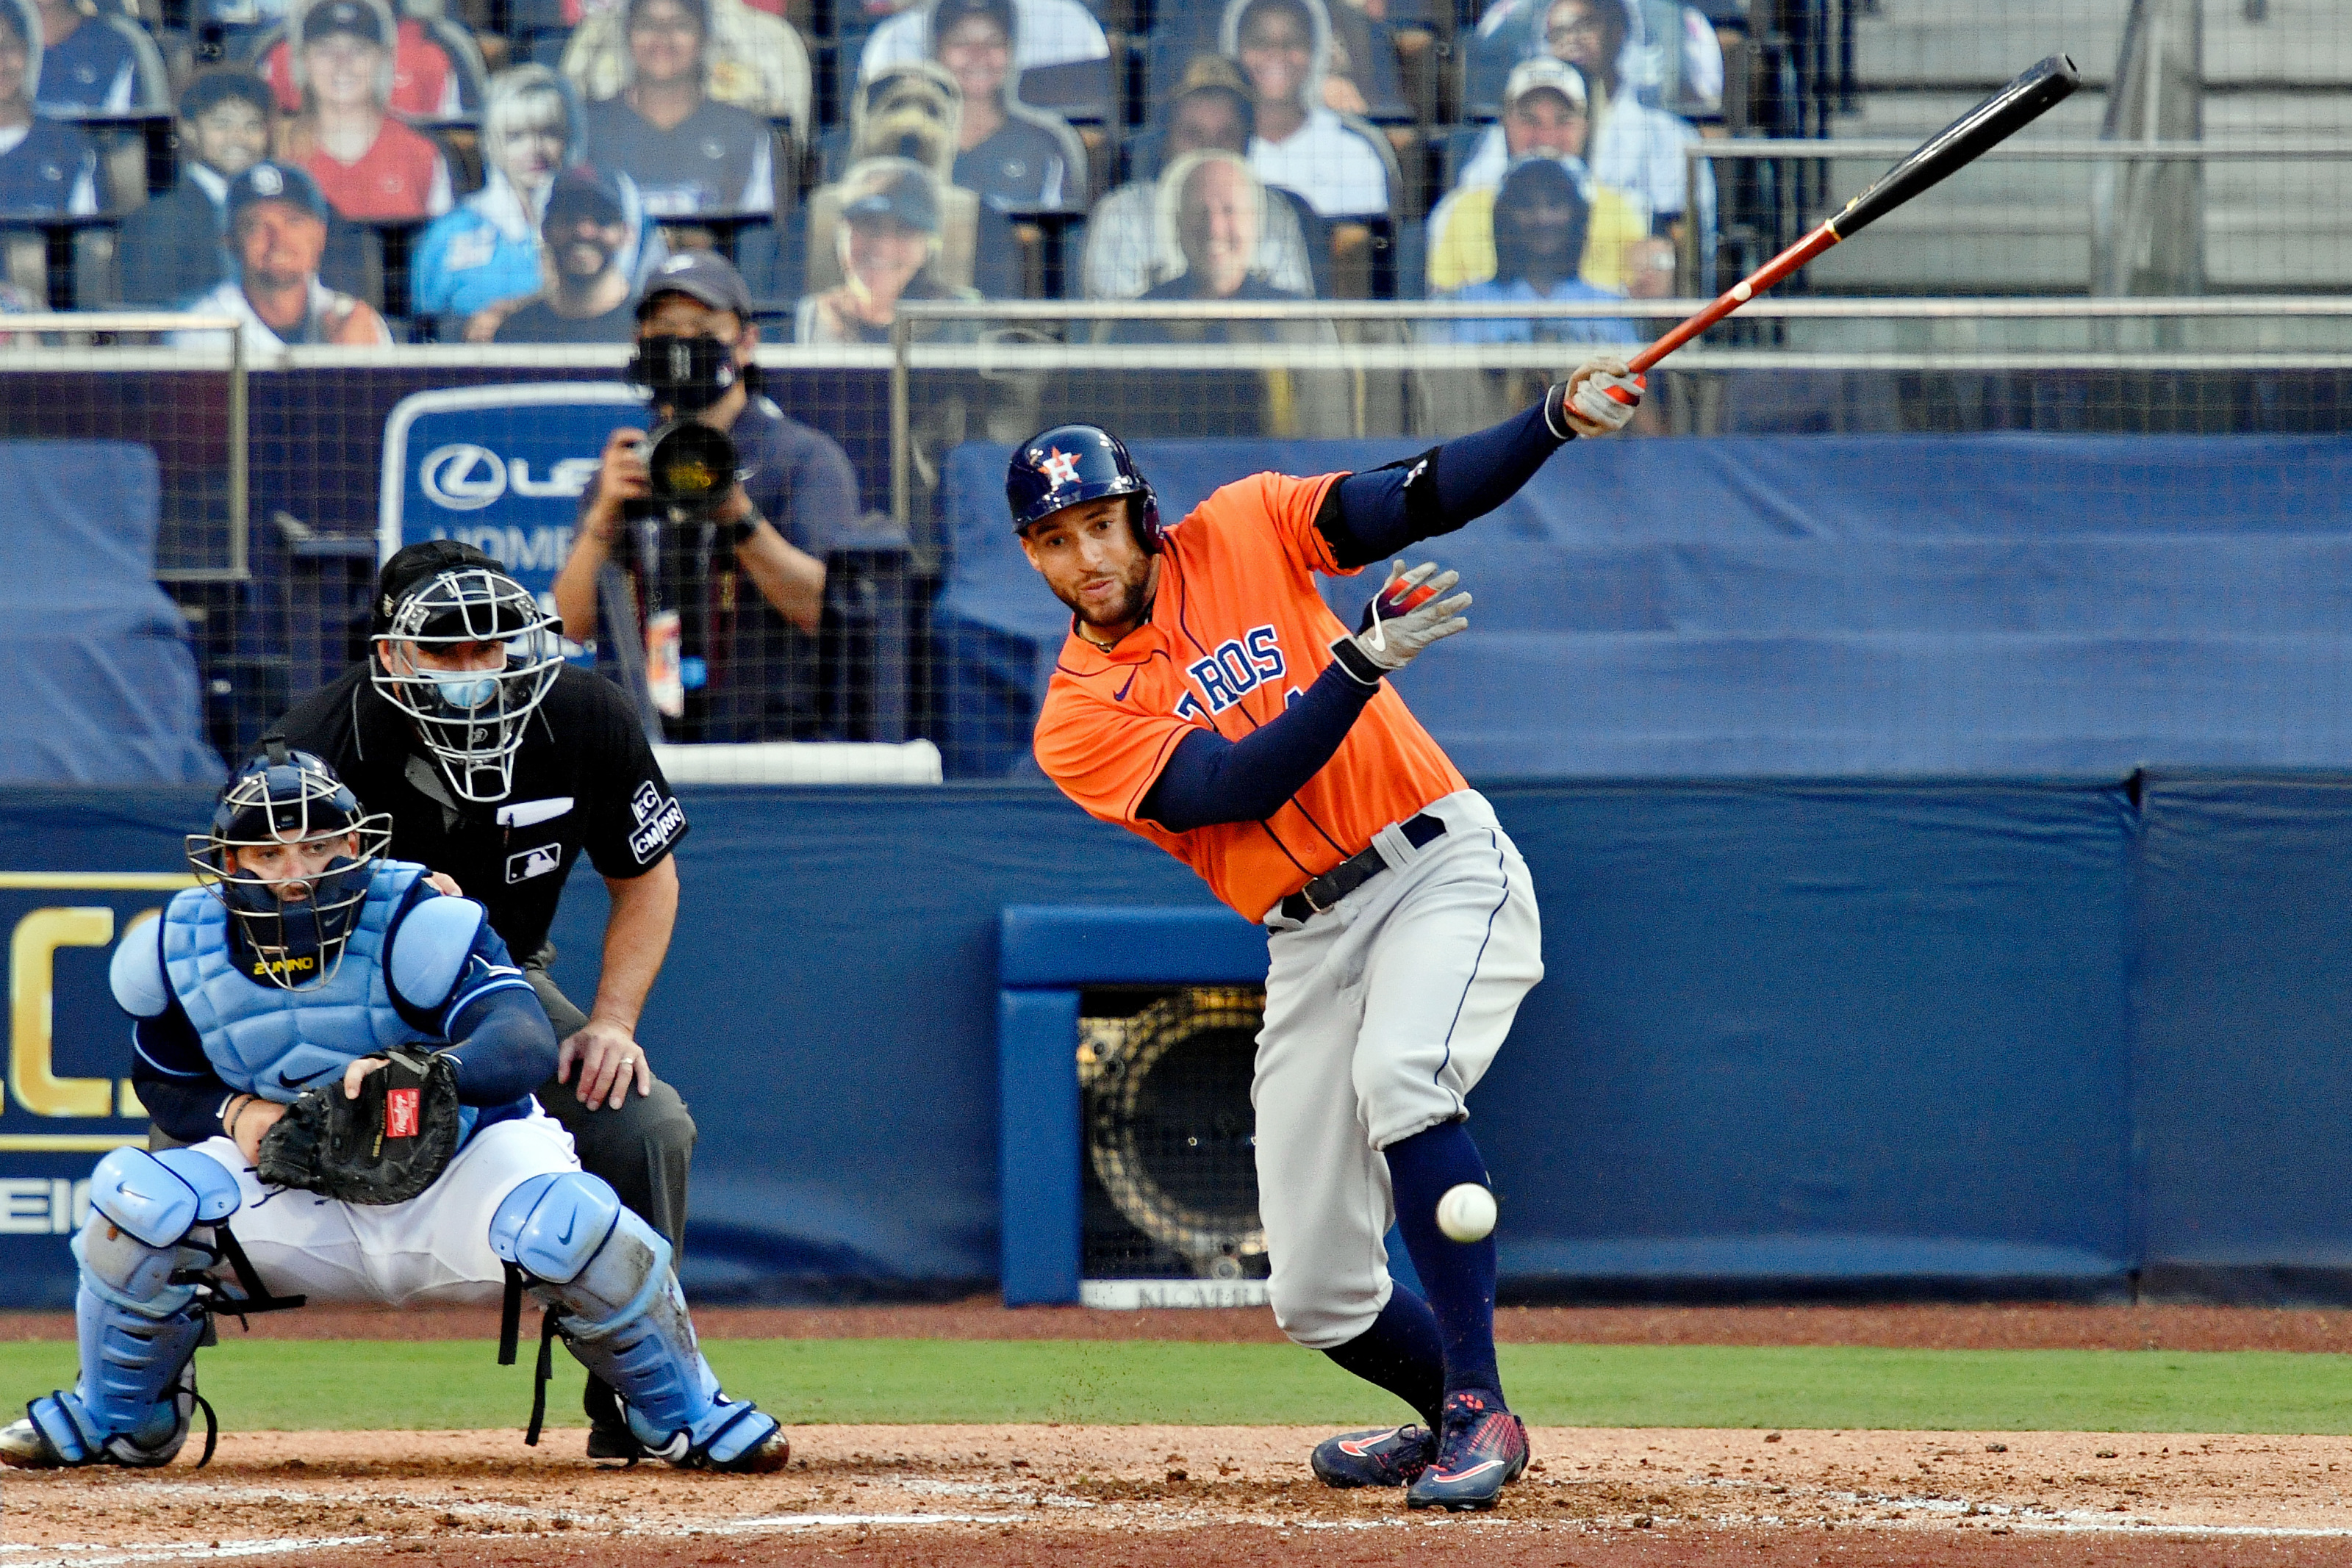 MLB rumors: Blue Jays' George Springer could miss Opening Day vs. Yankees 